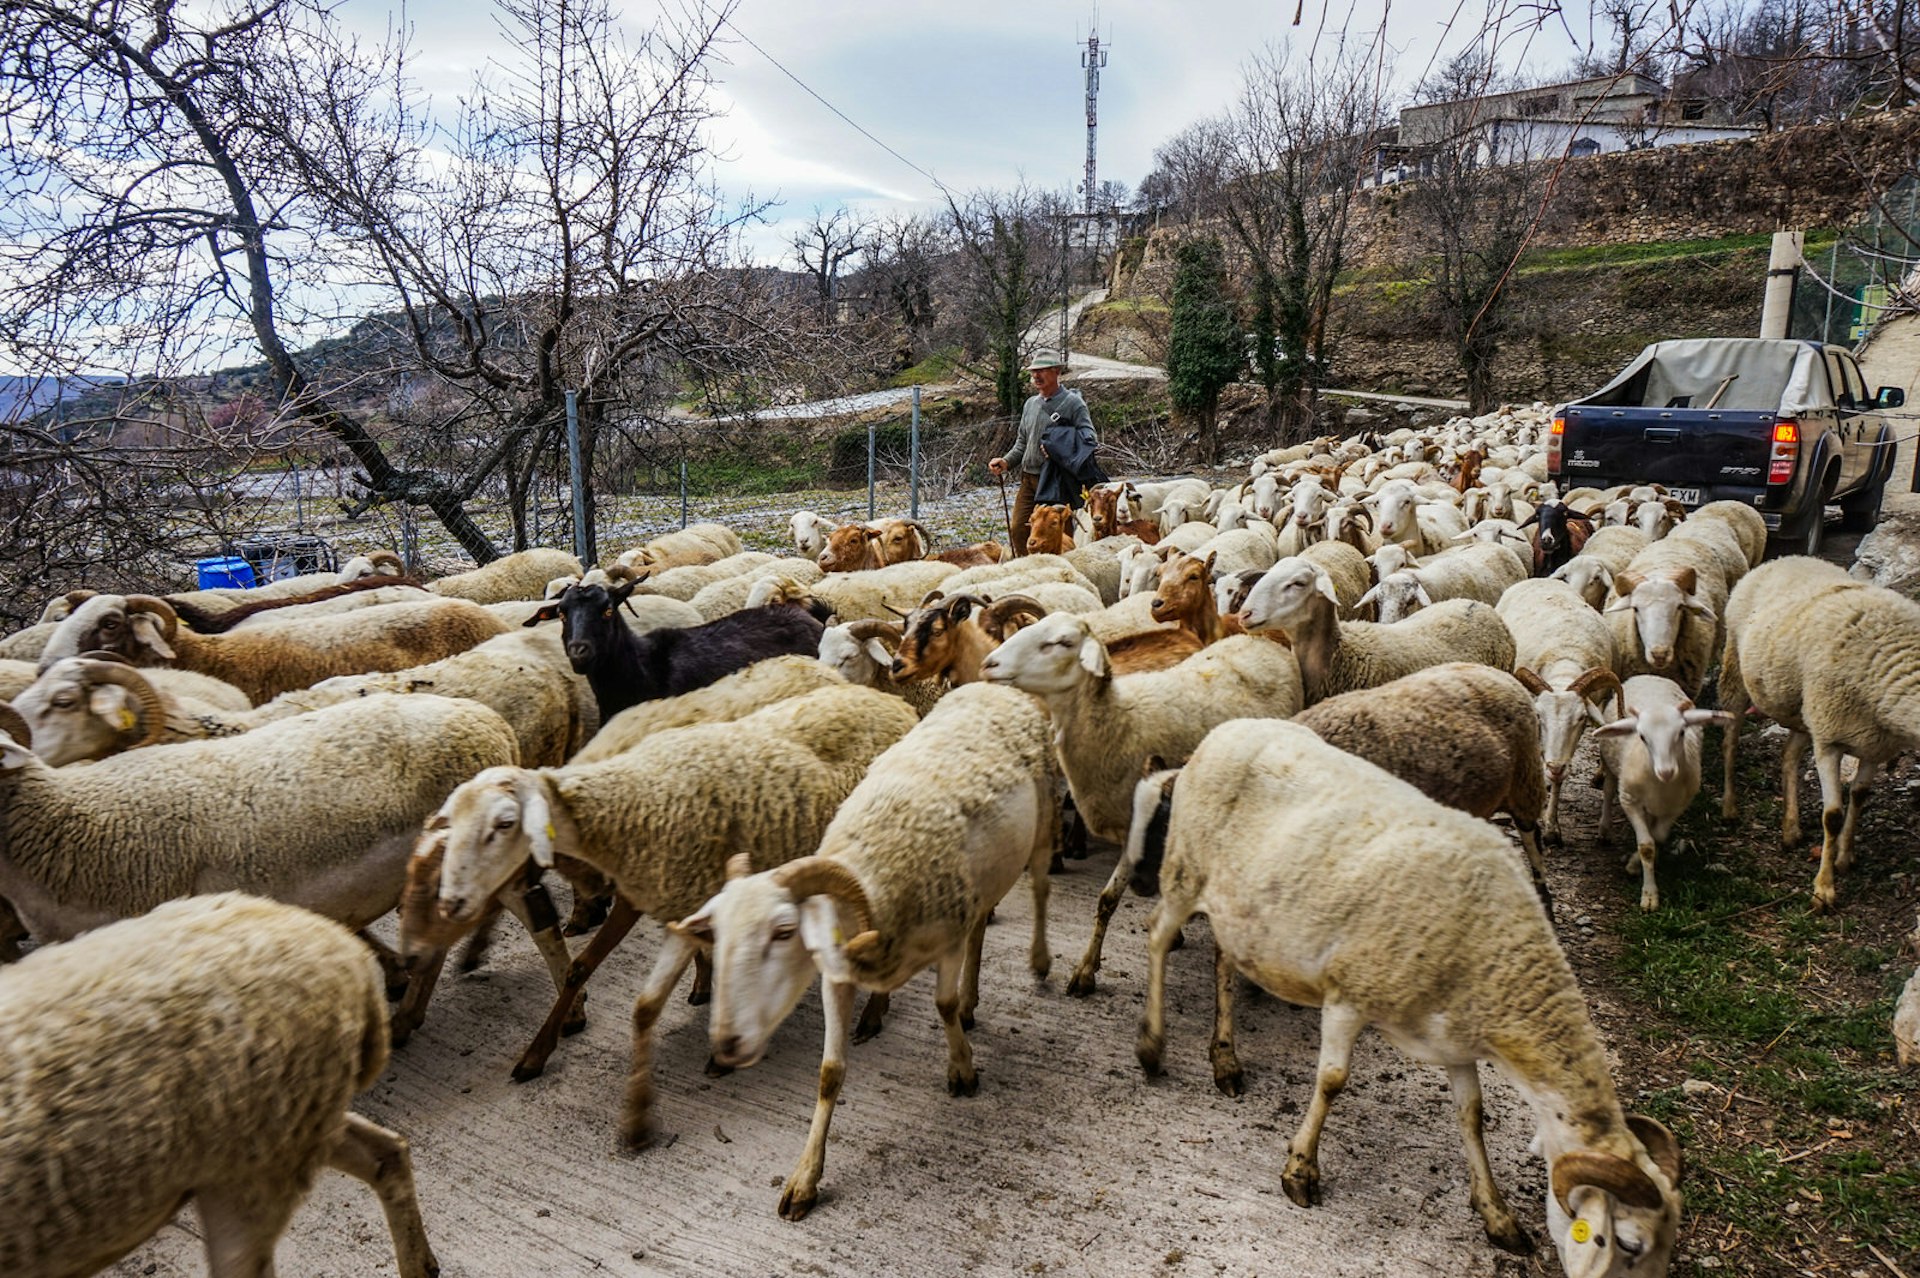 Goat-jams are more common than traffic-jams in Las Alpujarras © Brendan Sainsbury / Lonely Planet